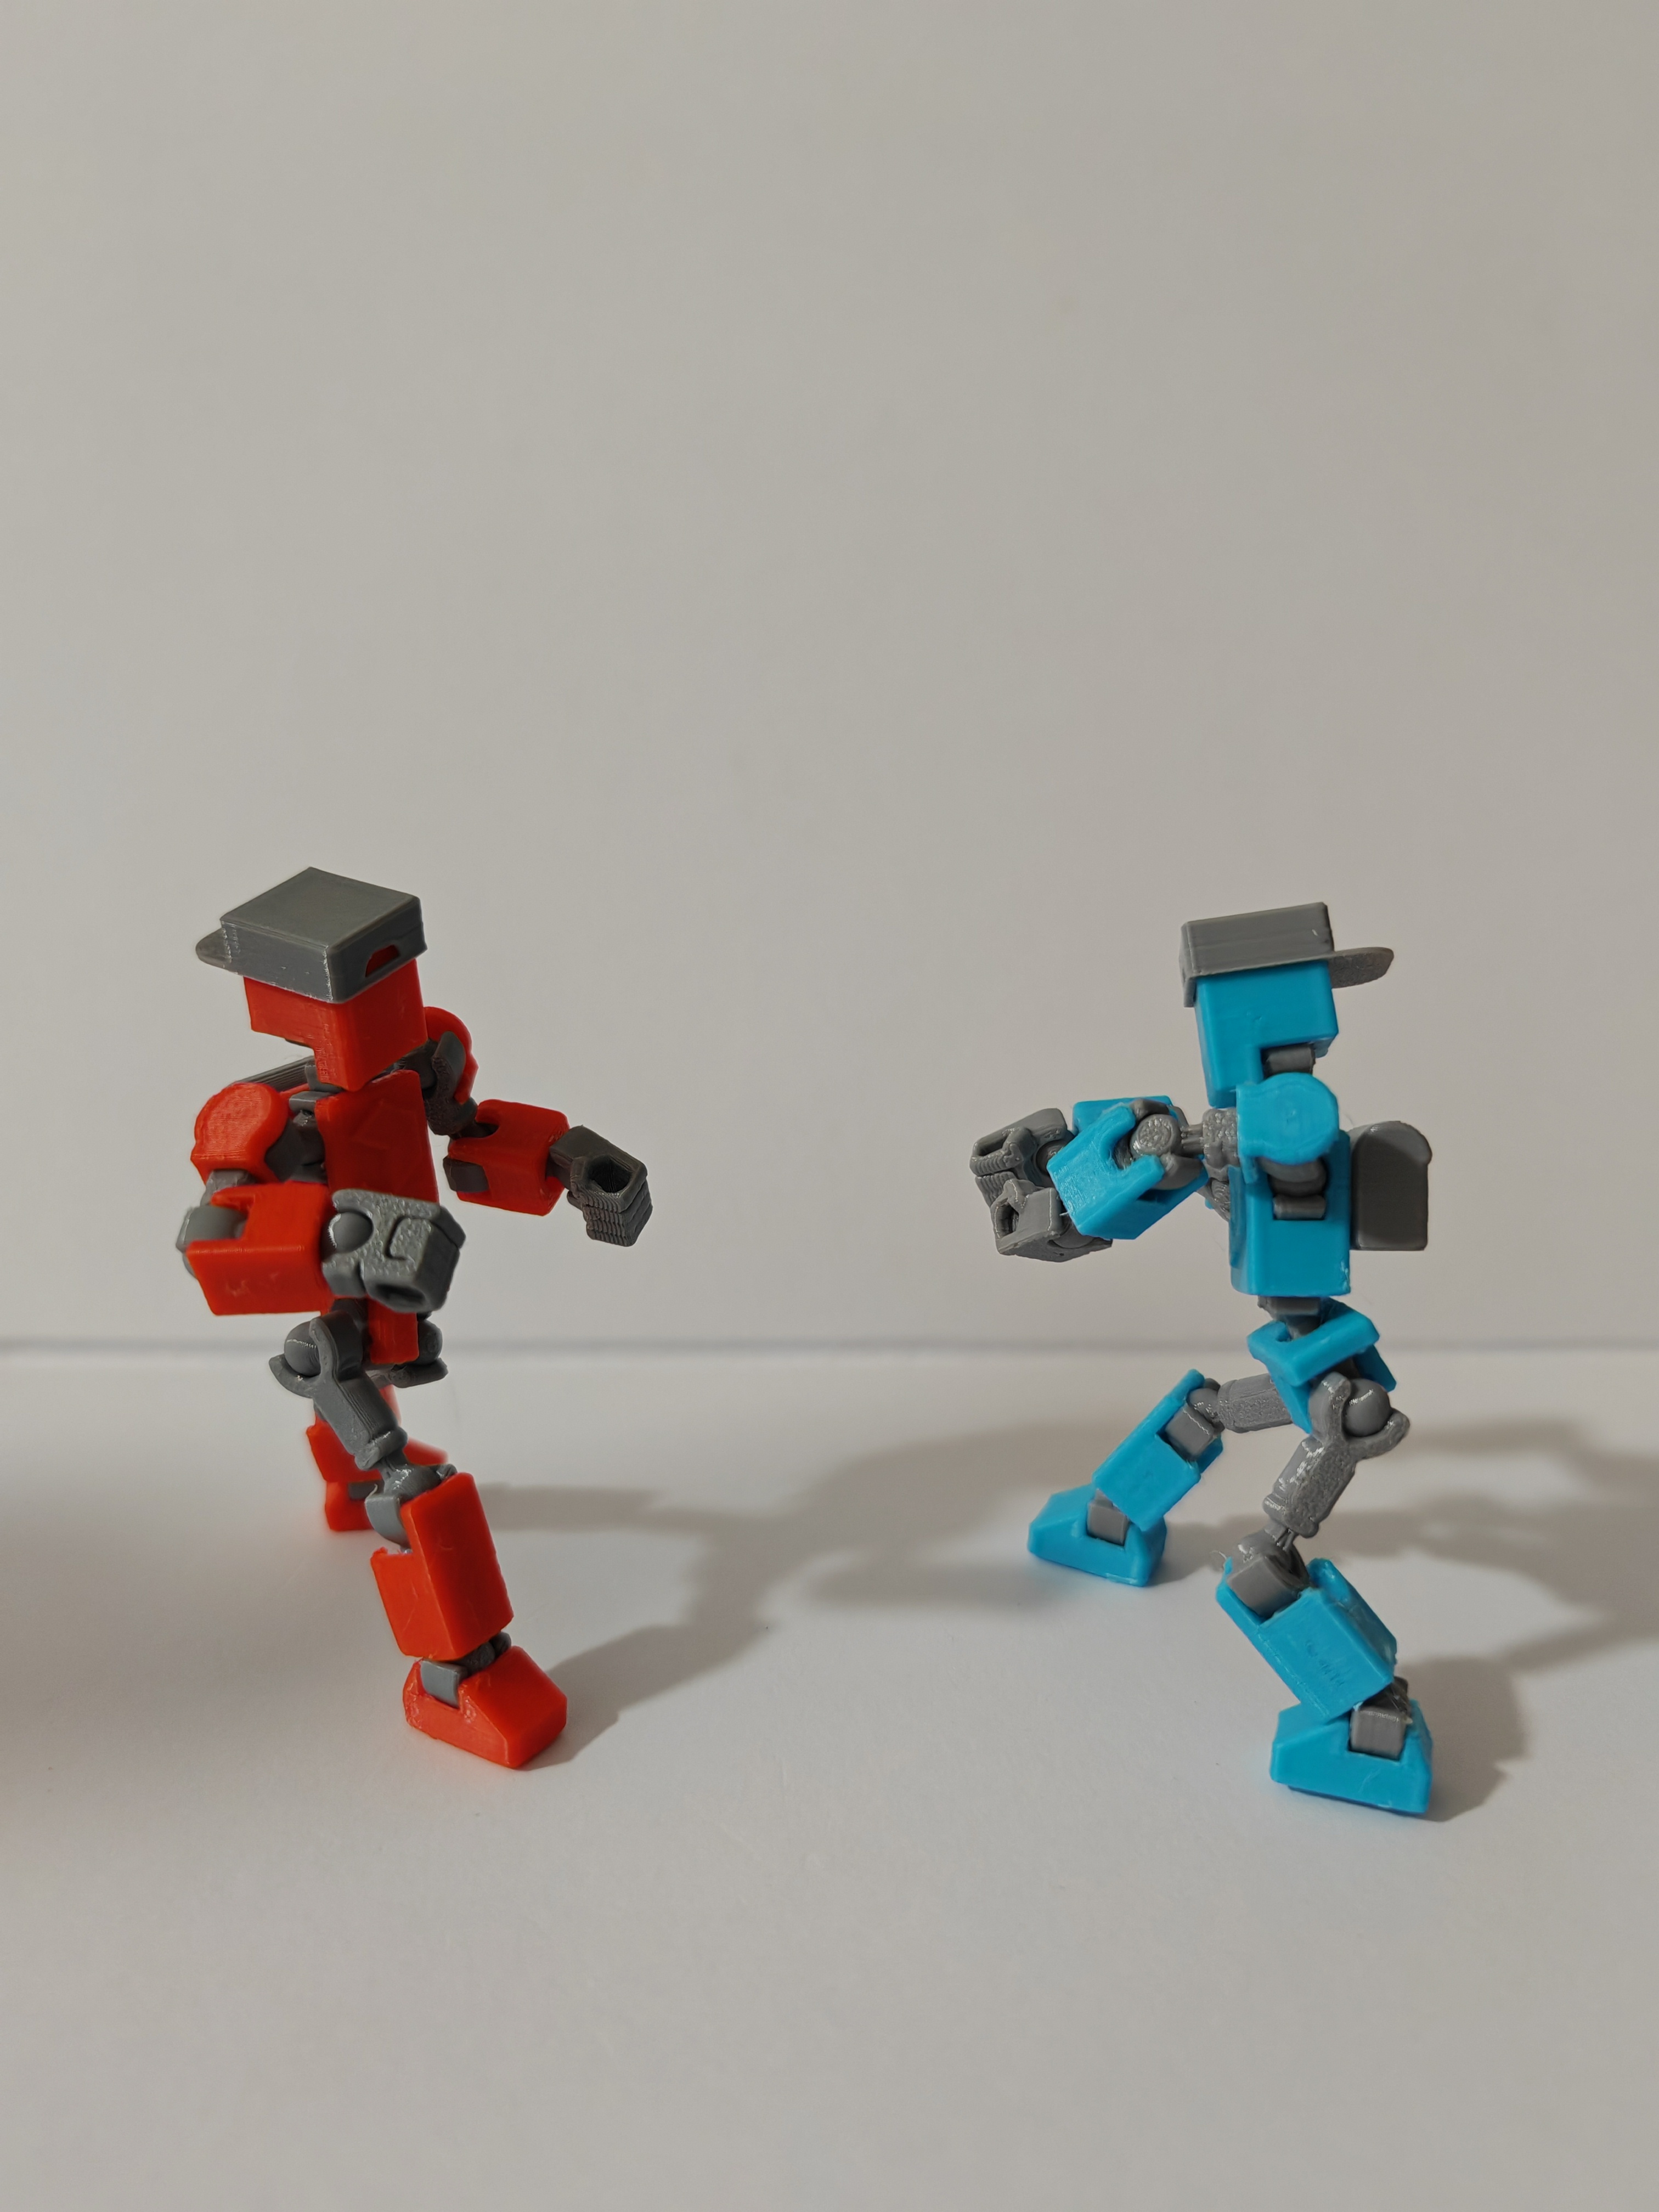 Mini 多关节可动人偶 3D打印 超可动玩偶全身可动机械风玩具解压